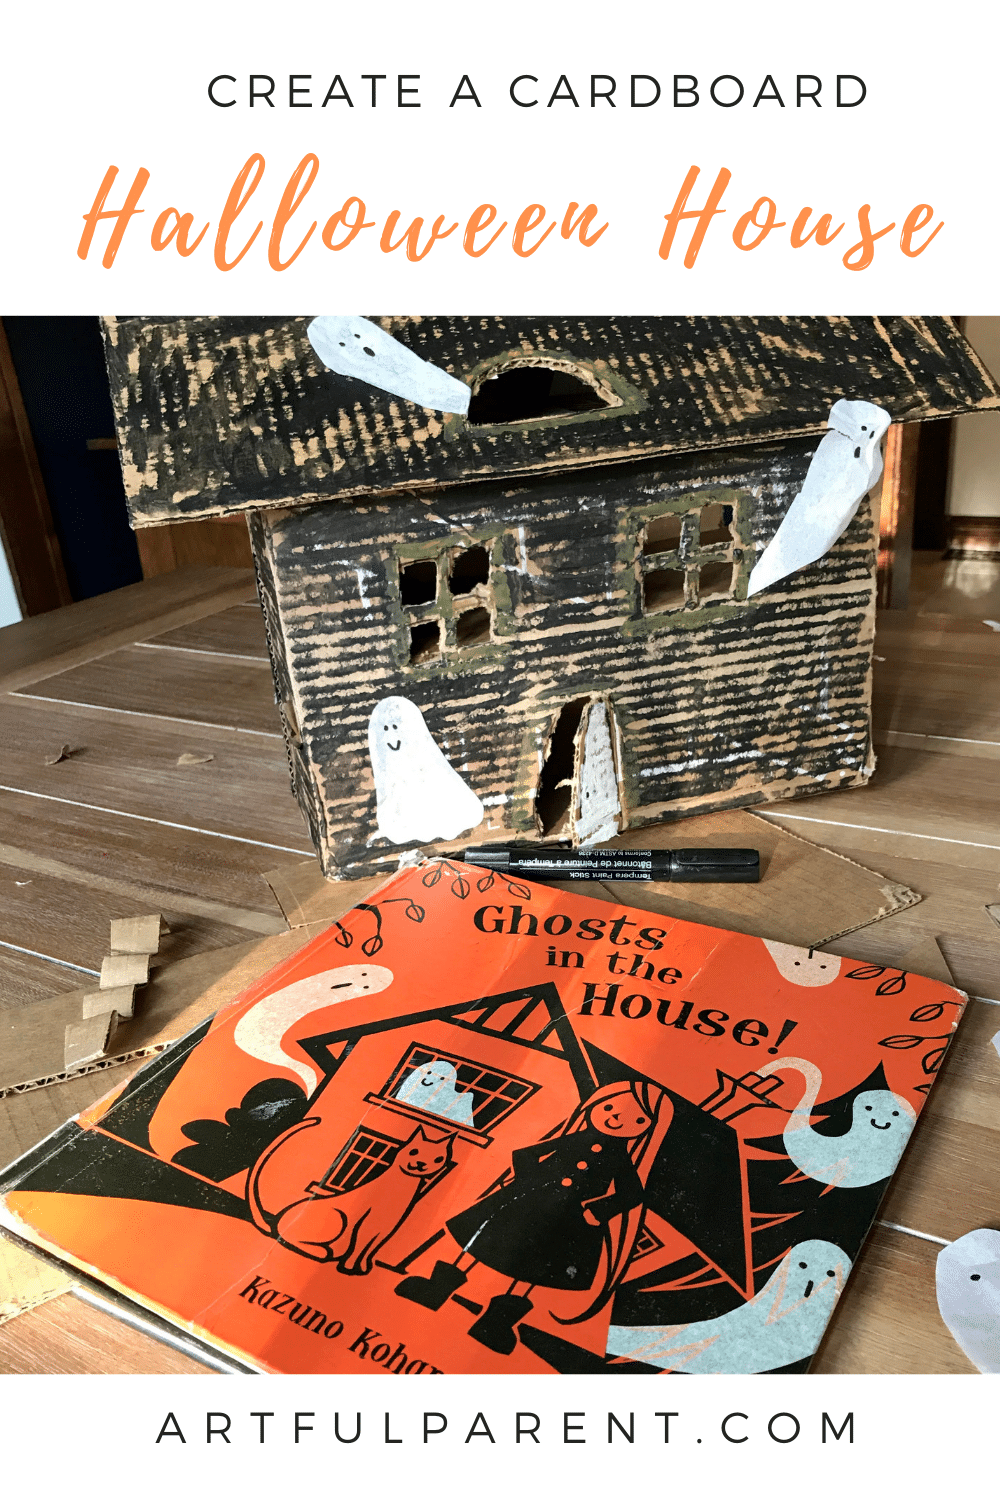 How to Make a Cardboard Halloween House